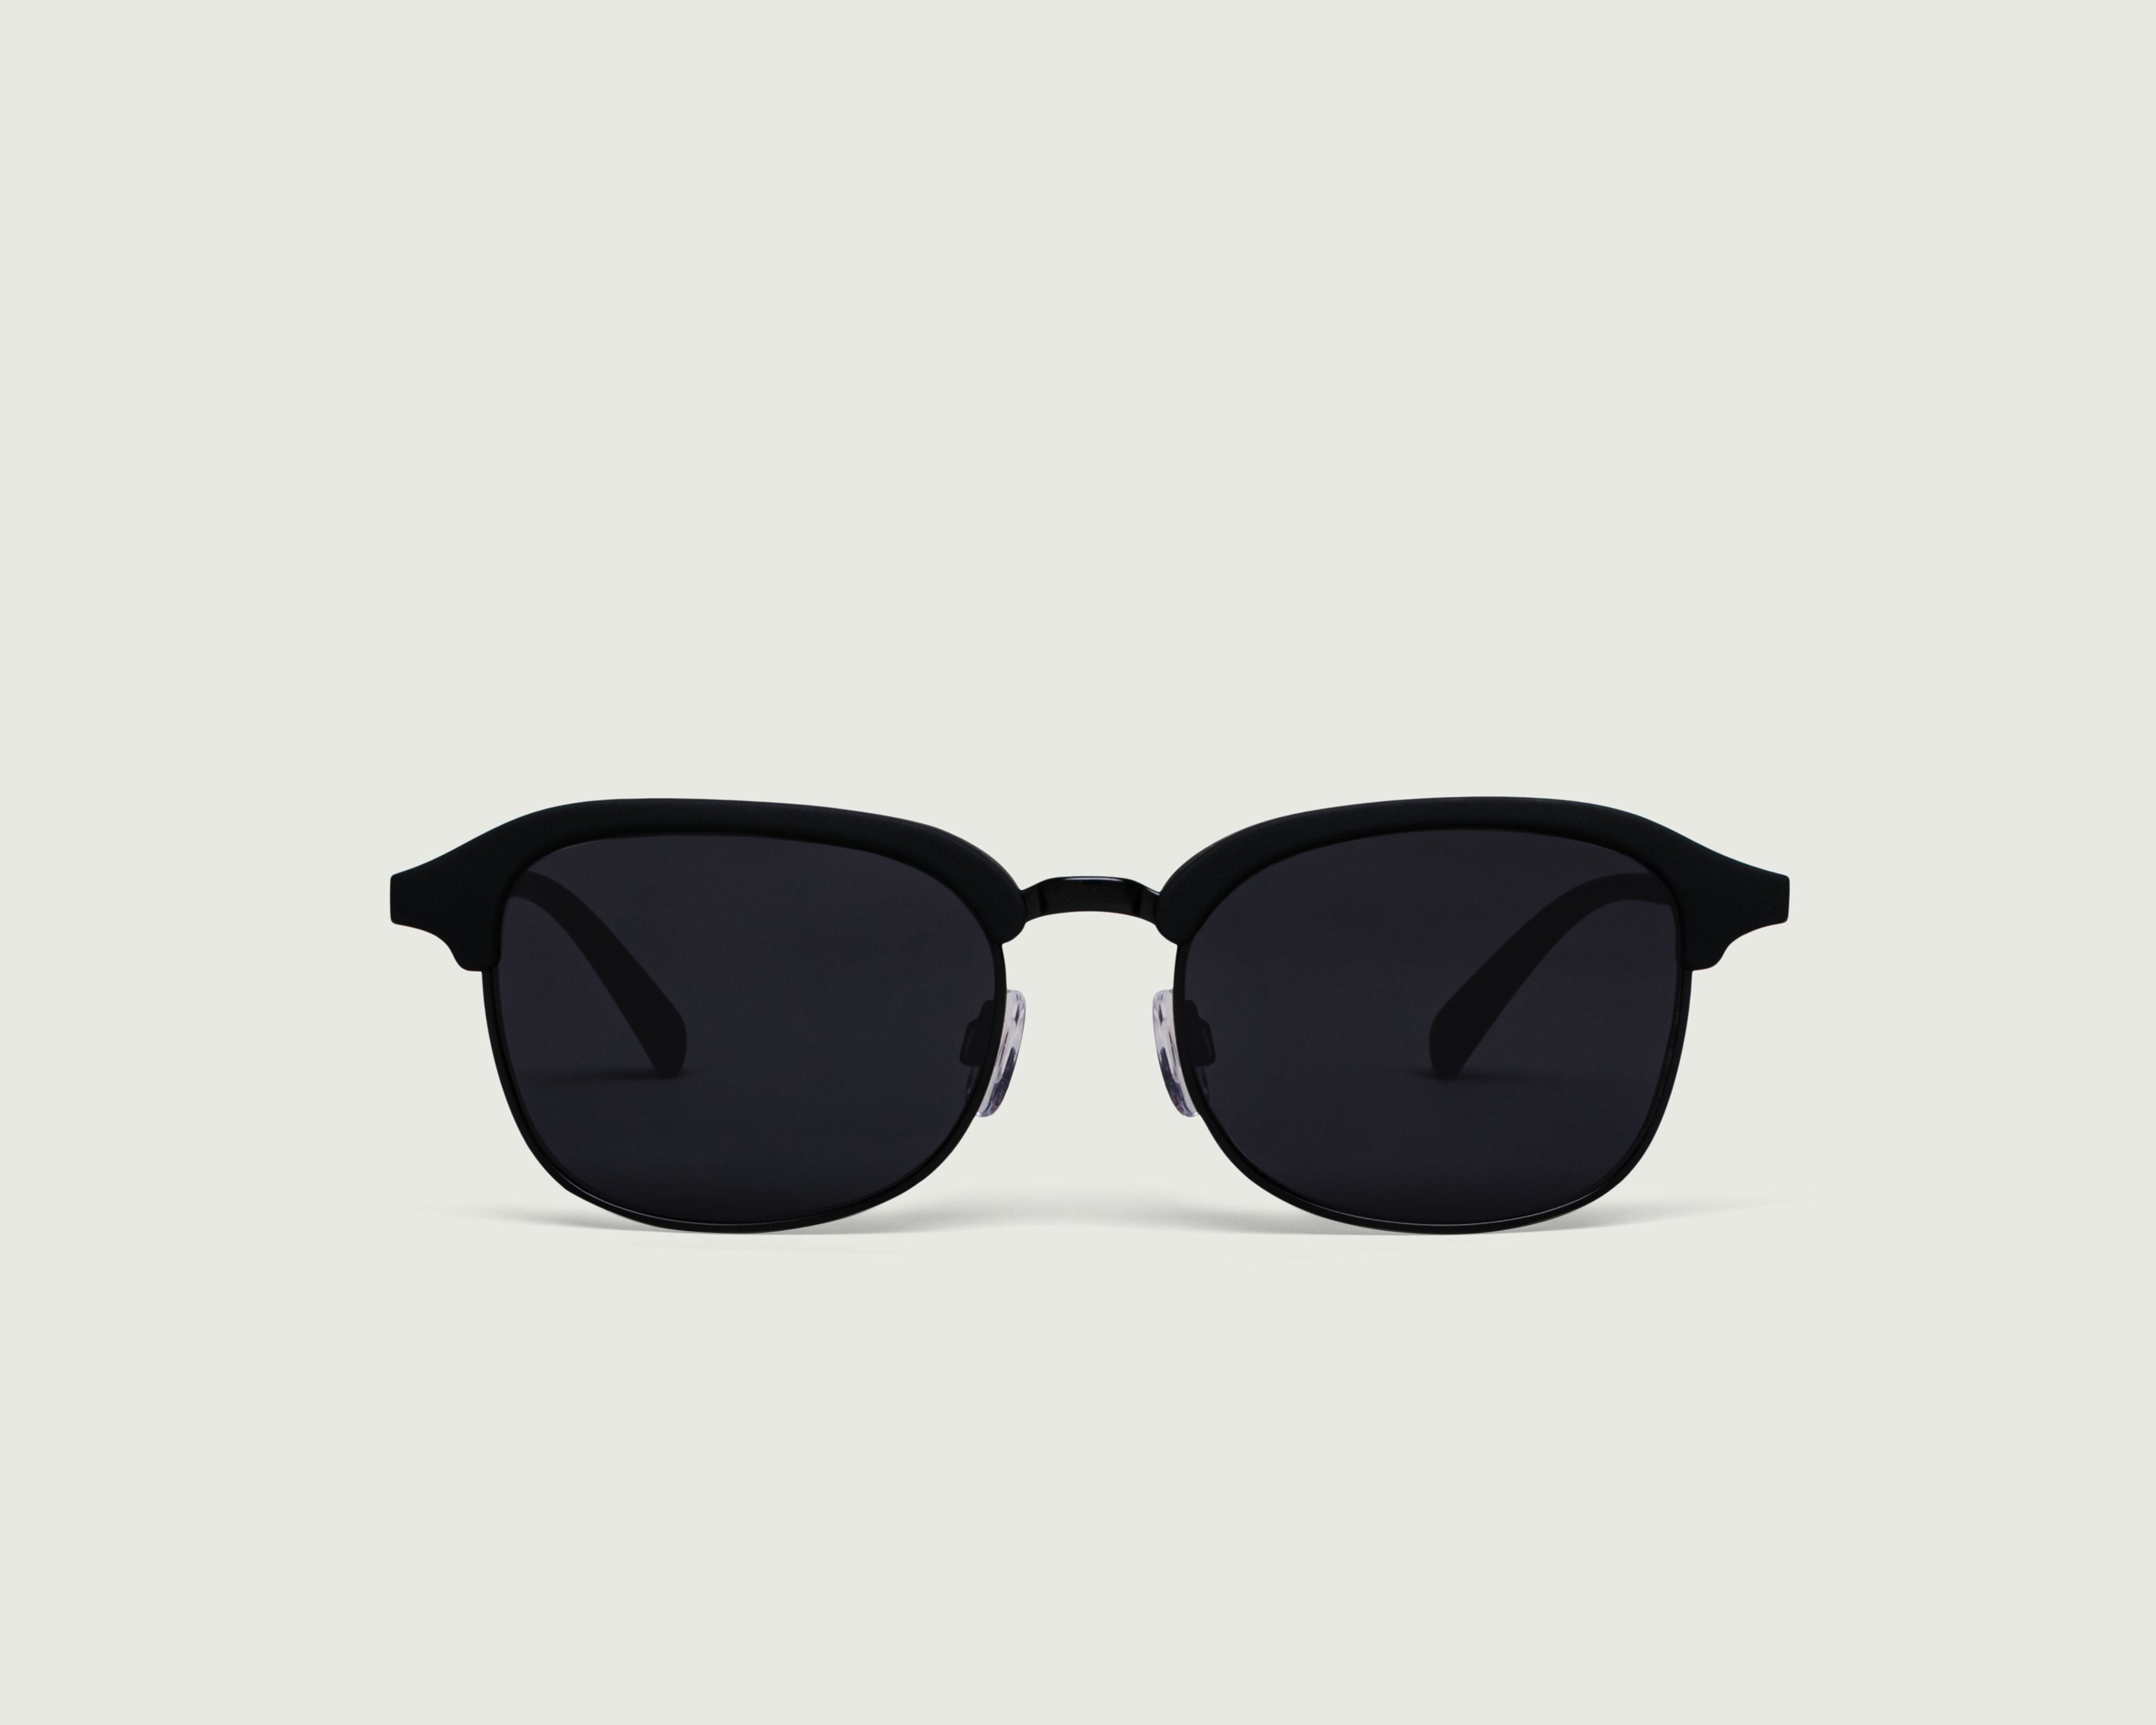 Ink::Castro Sunglasses browline black plastic metal front